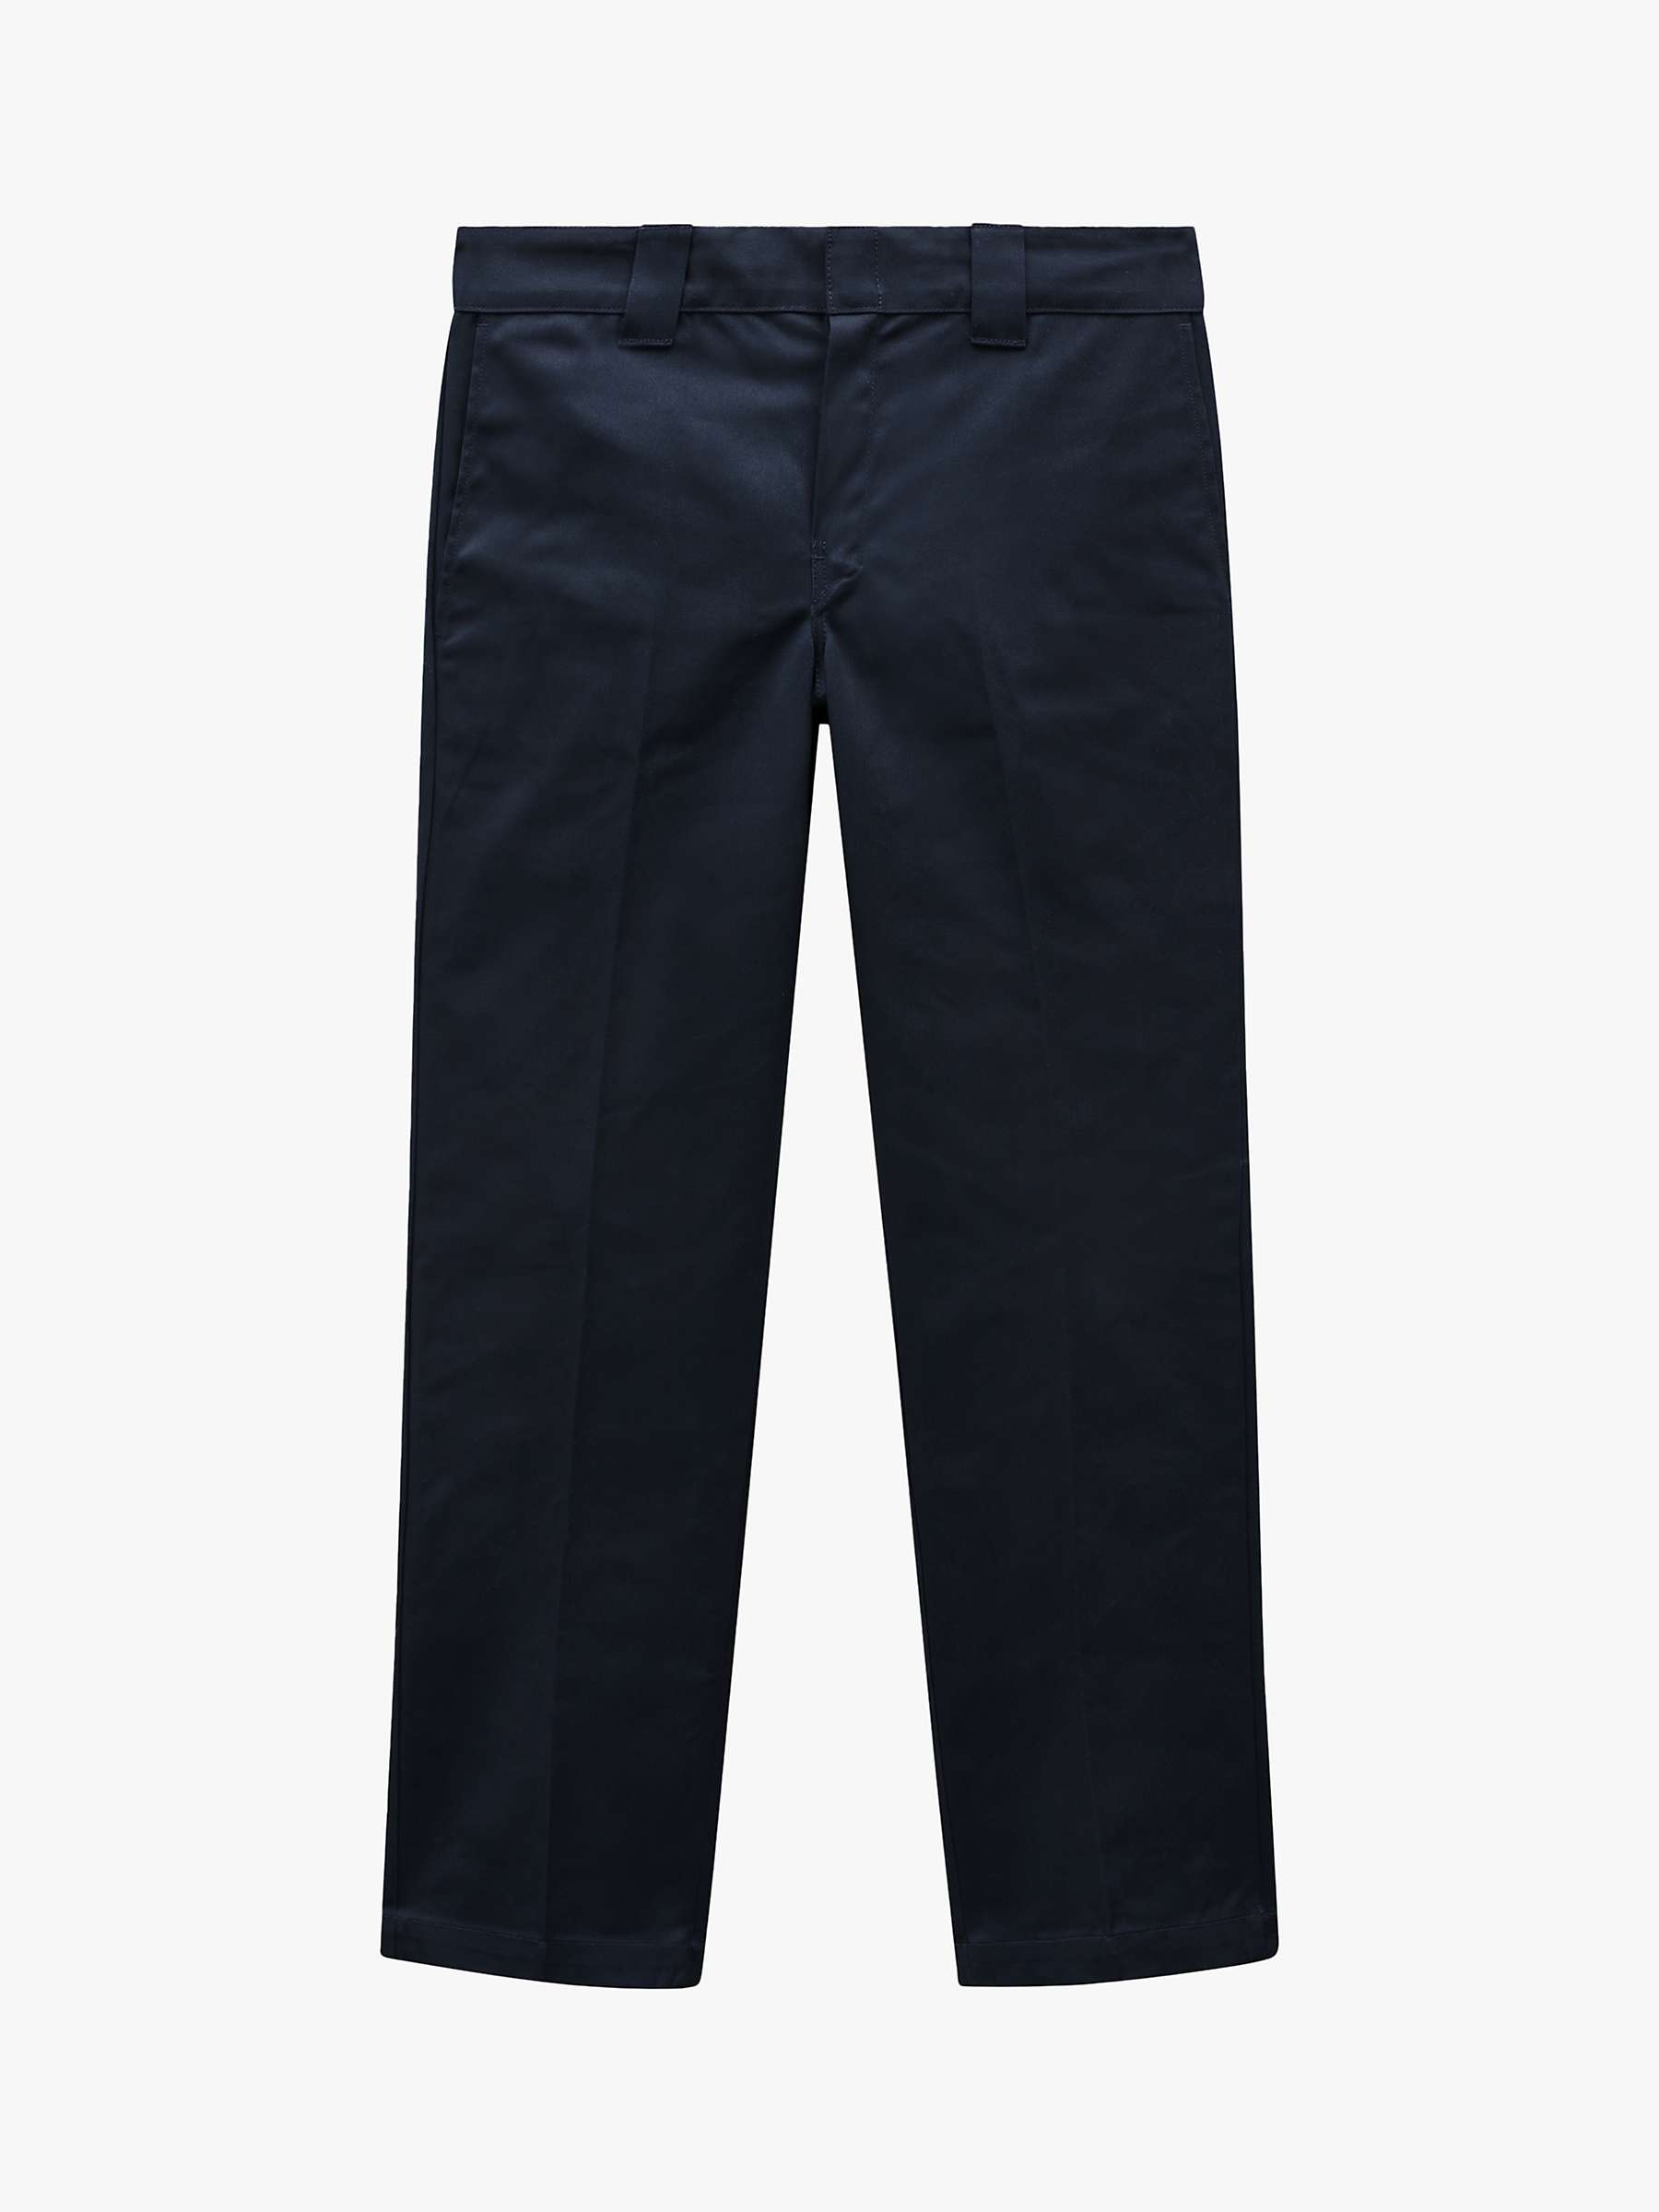 Buy Dickies 873 Slim Fit Chino Trousers Online at johnlewis.com